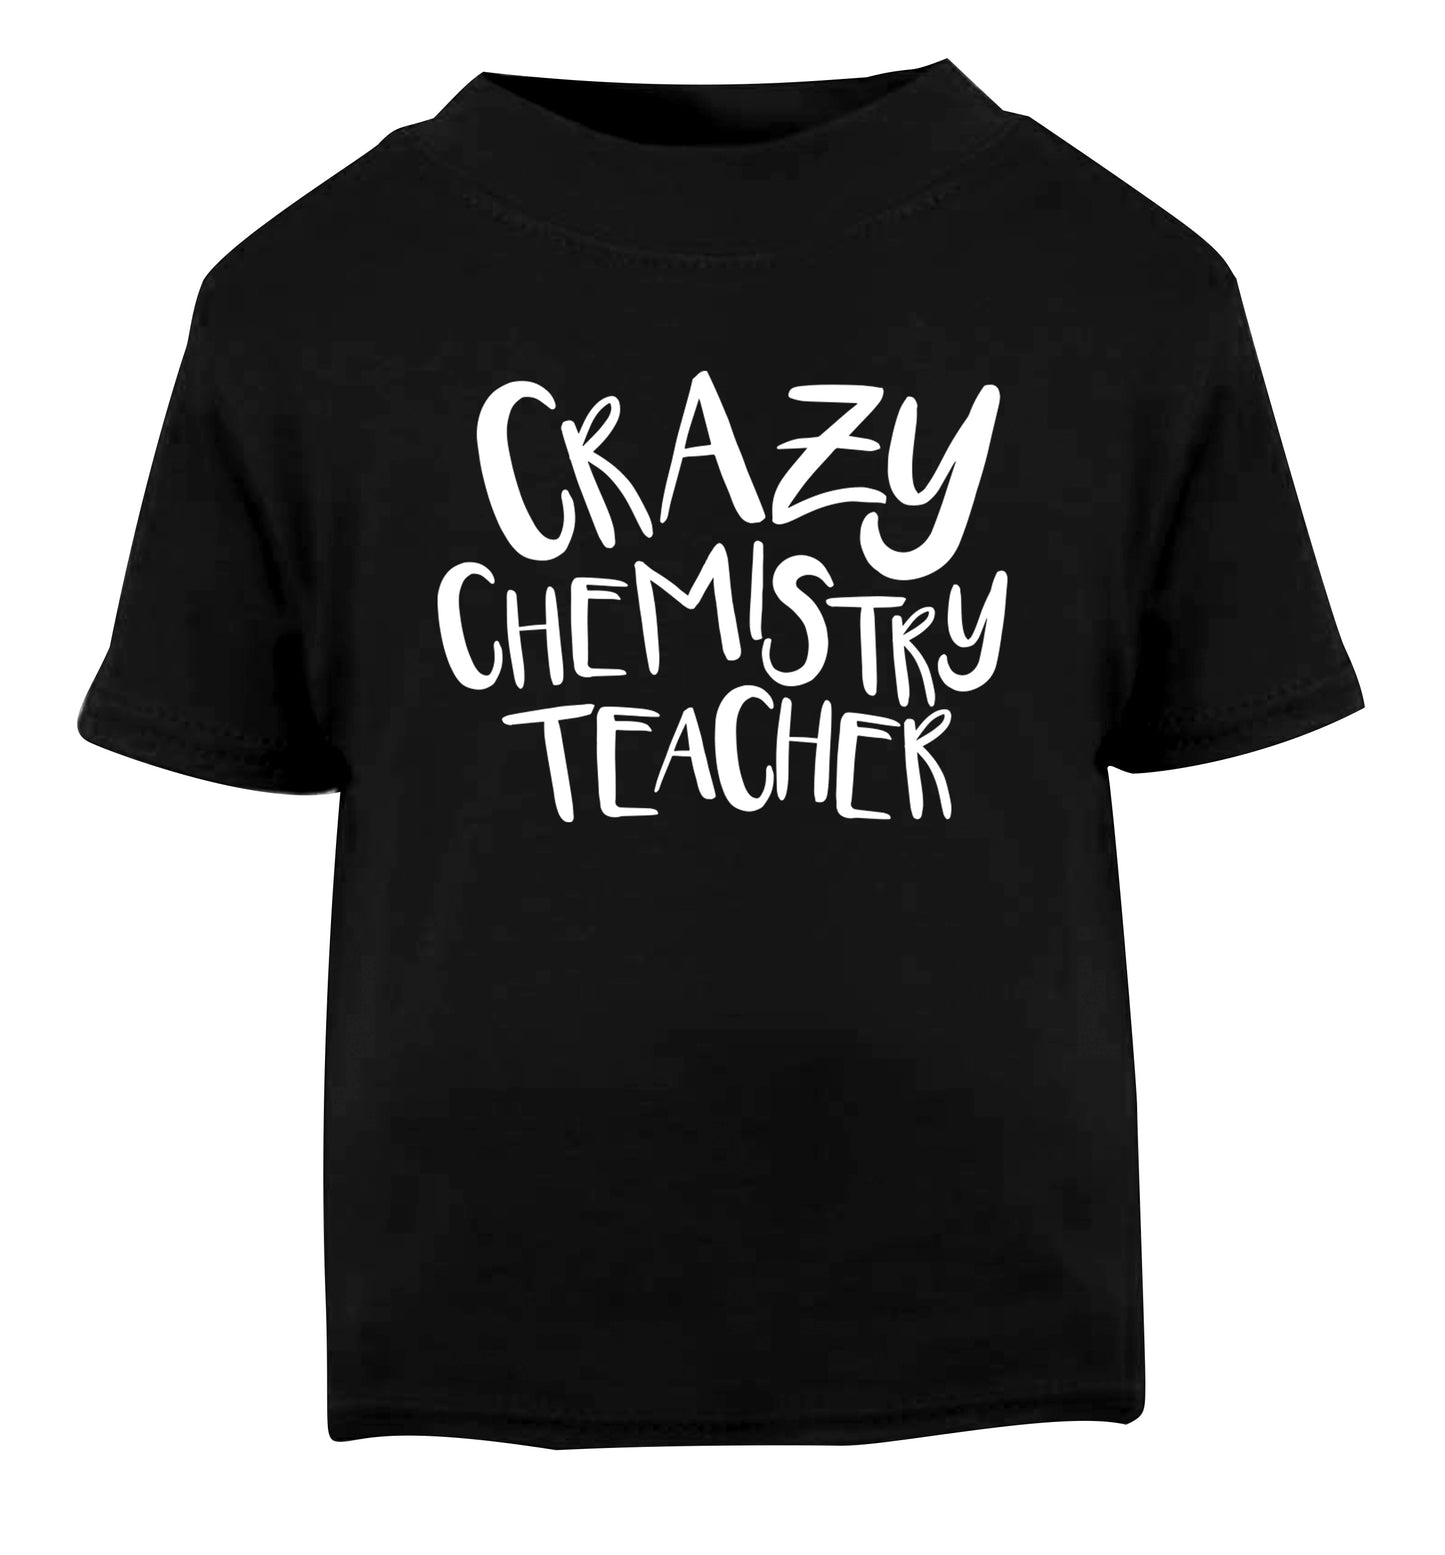 Crazy chemistry teacher Black Baby Toddler Tshirt 2 years